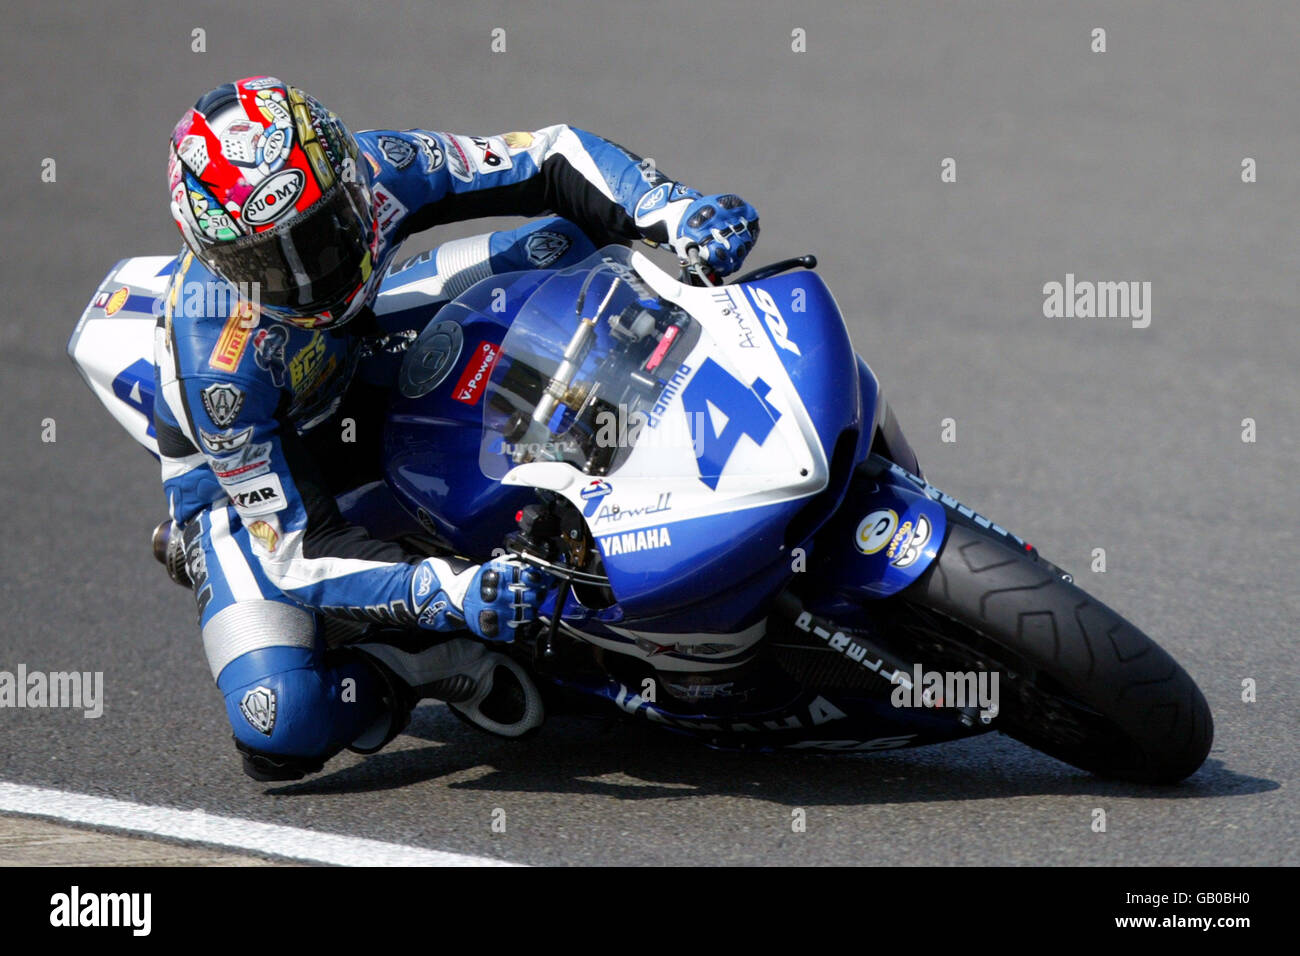 Motorcycling - Supersport World Championship - Silverstone. Jurgen Vd Goorbergh, Yamaha Belgarda Stock Photo